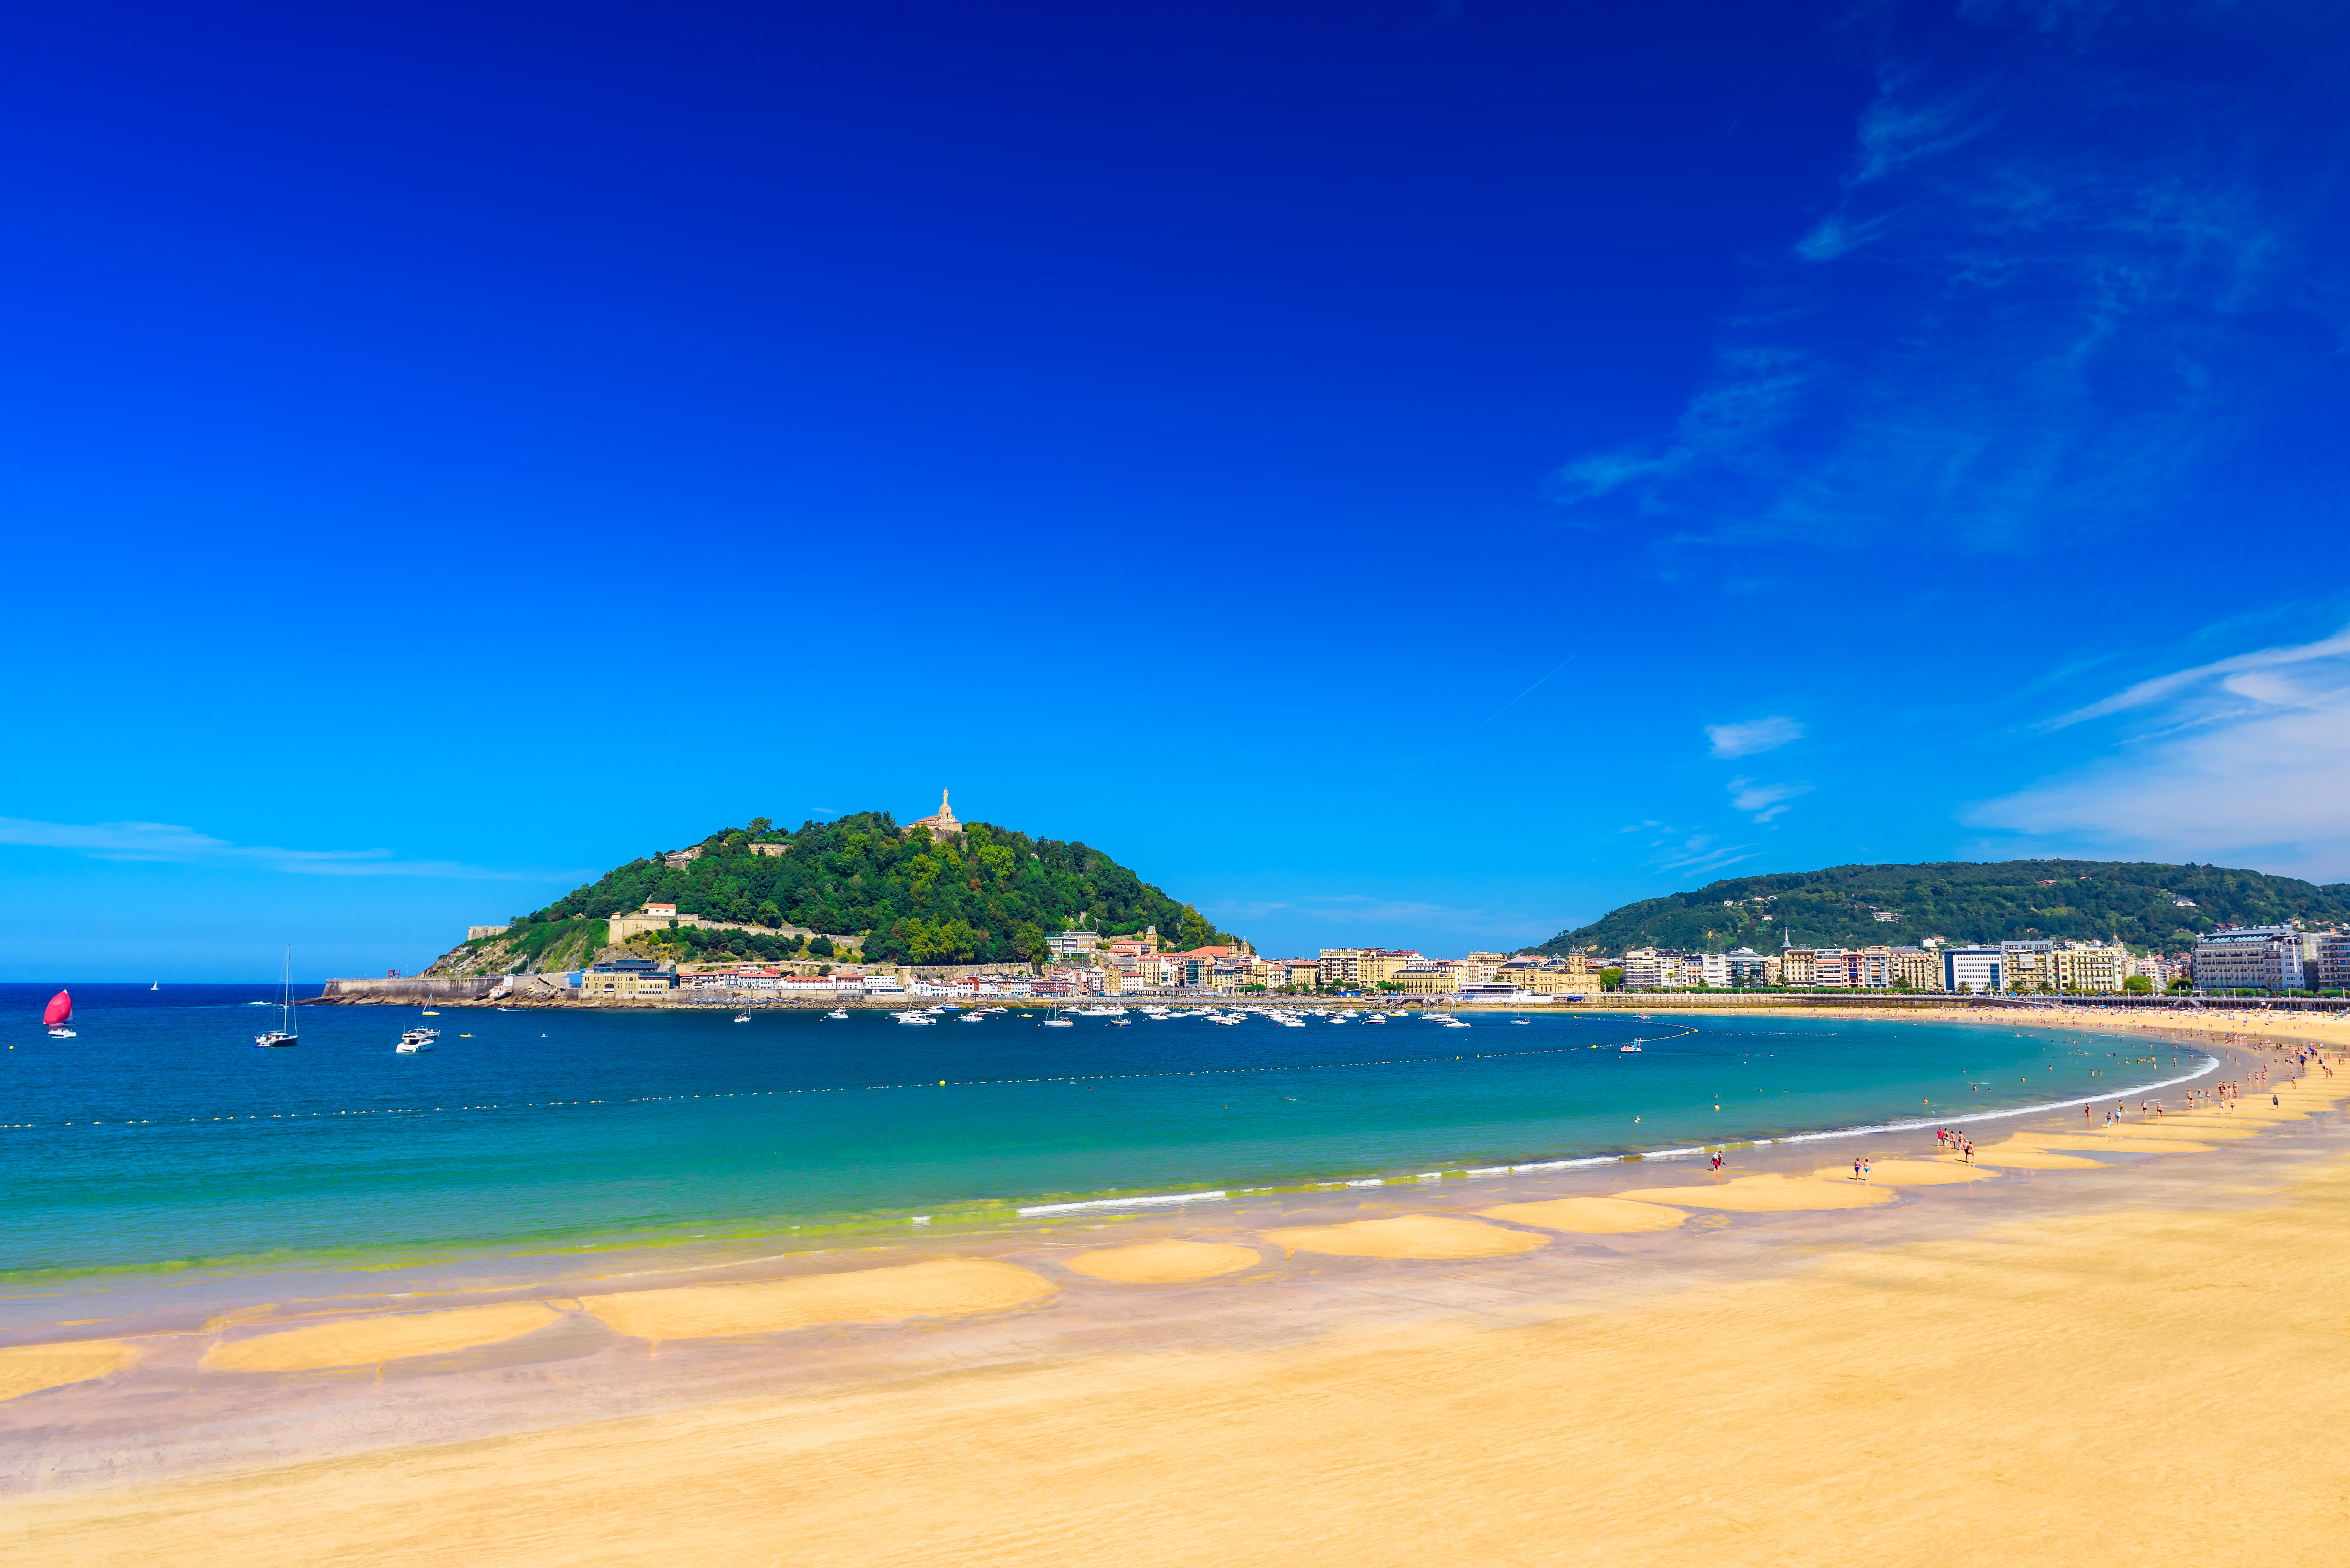 San Sebastián is home to La Concha - one of Europe's best beaches